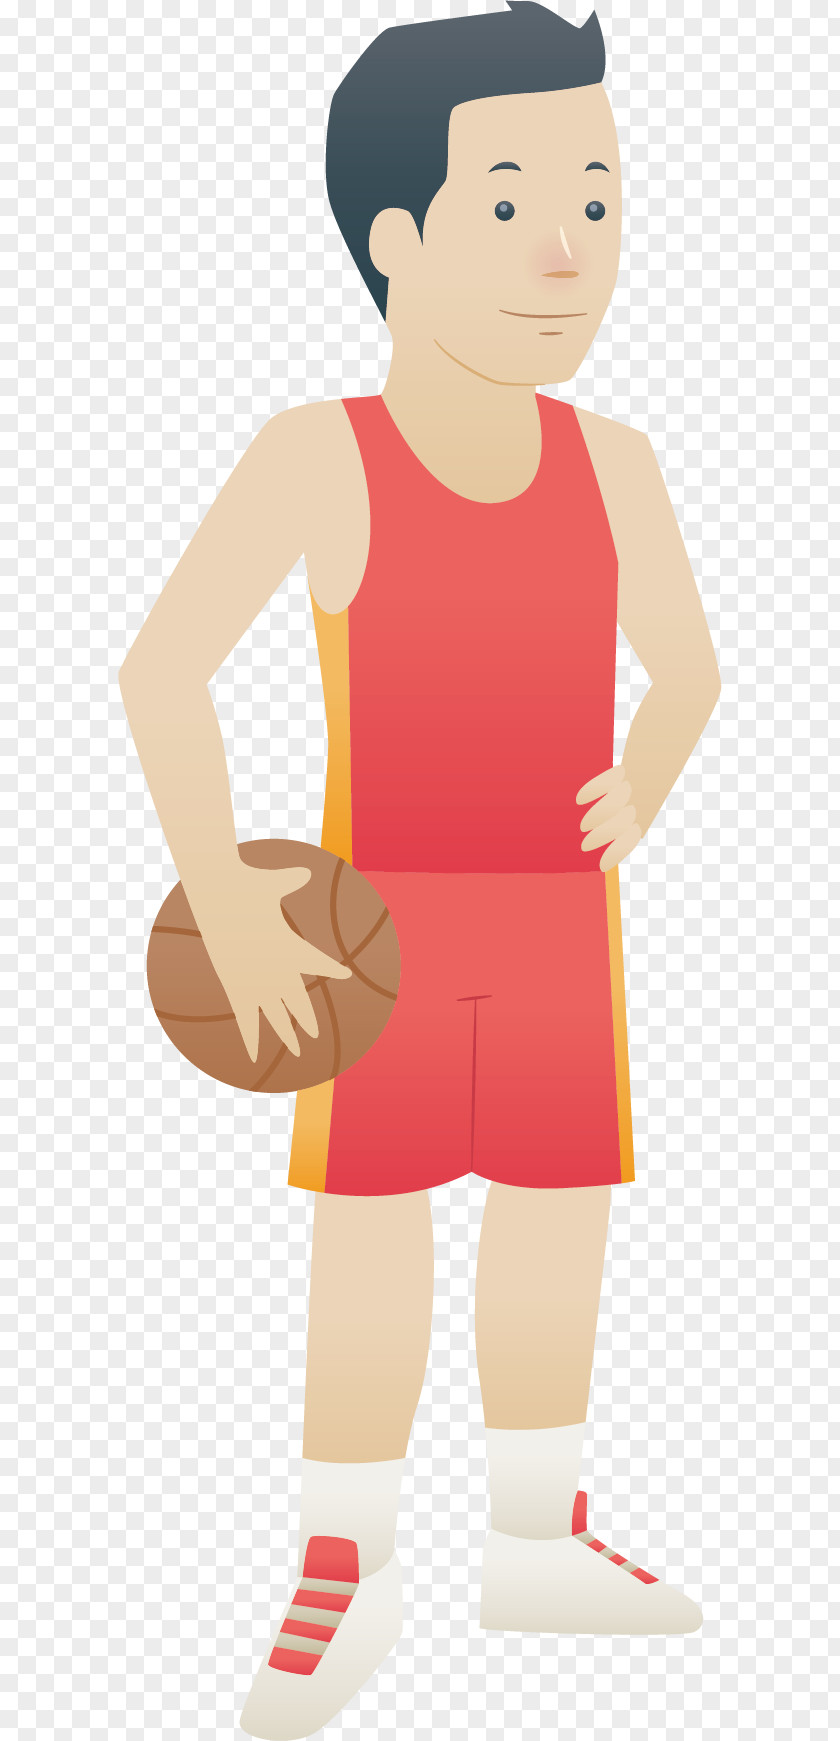 Cartoon Basketball Player Vector Illustration PNG